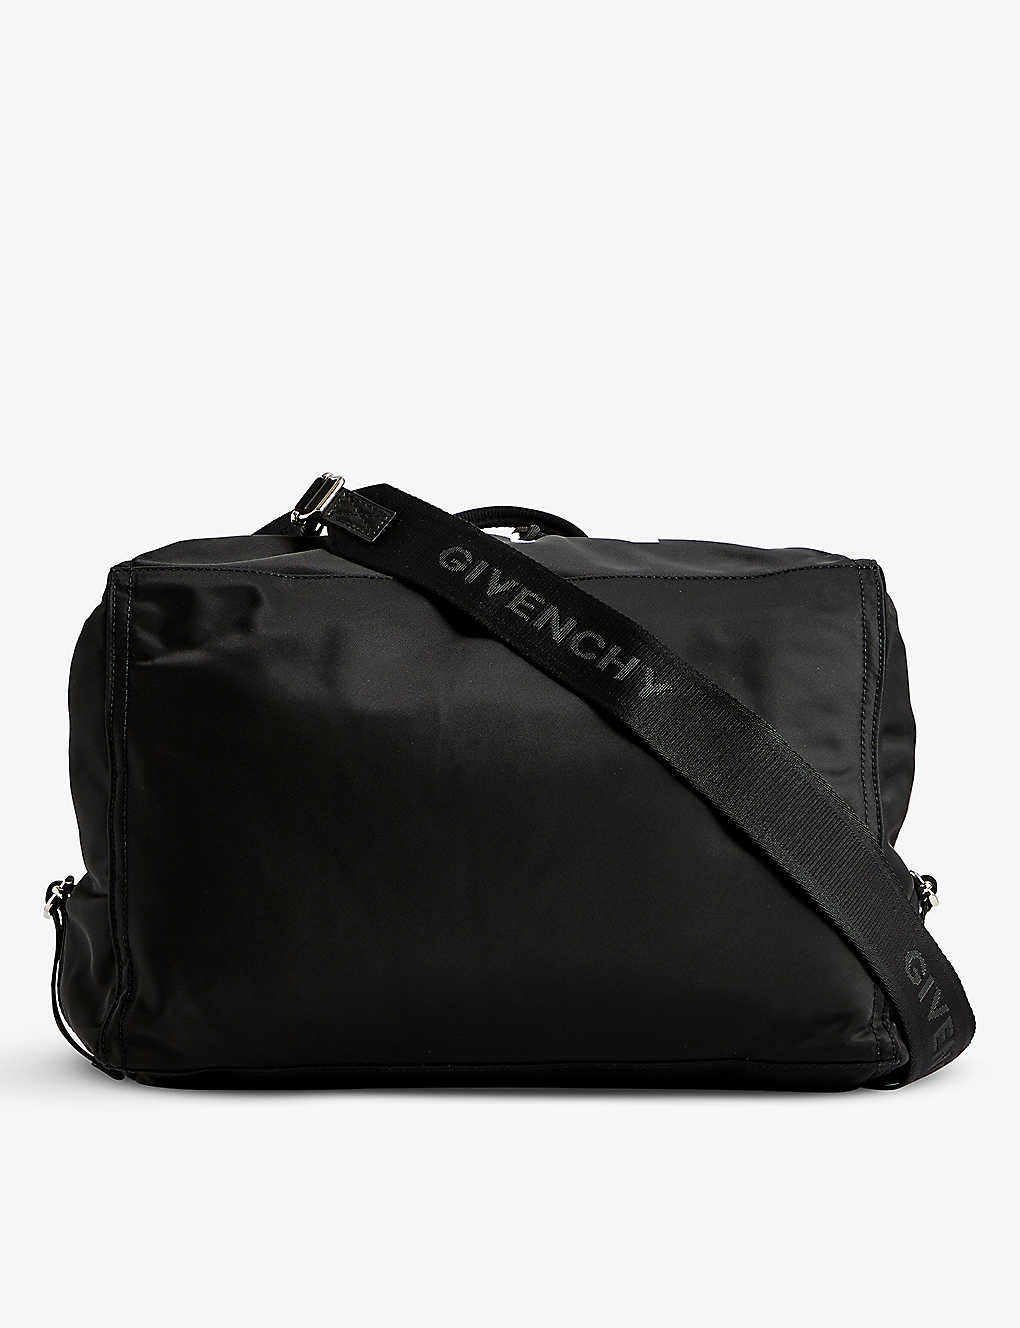 Givenchy Pandora Brand-print Shell Cross-body Bag In Black/white